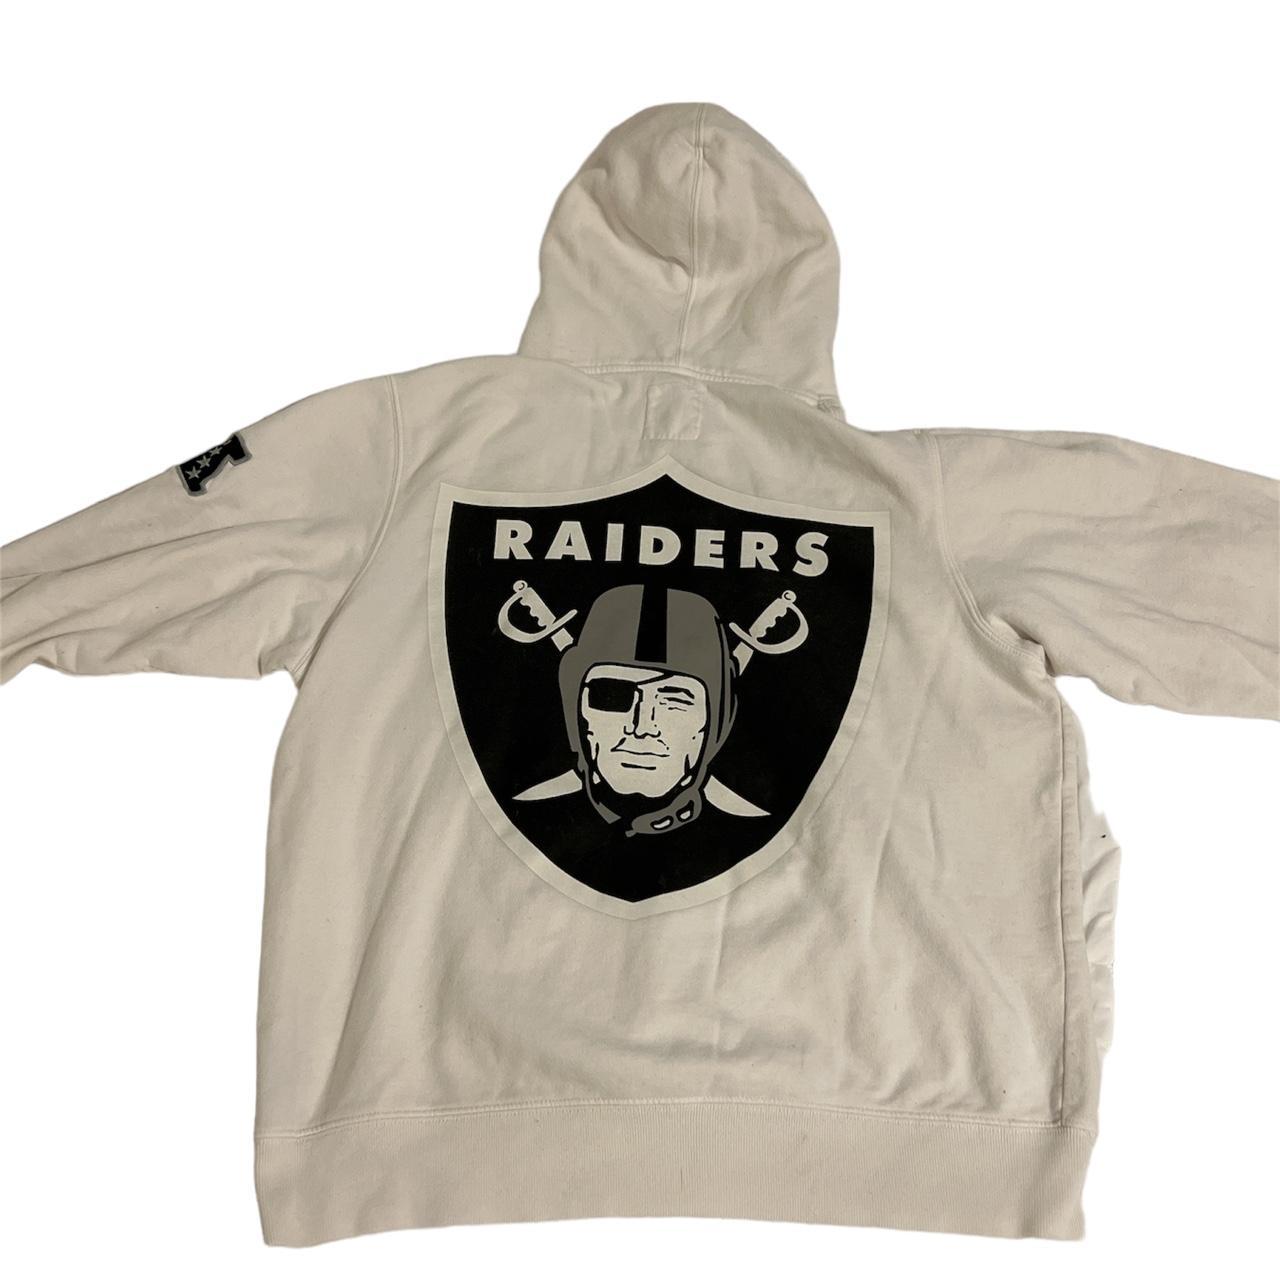 Supreme Raiders 47 Hooded Sweatshirt